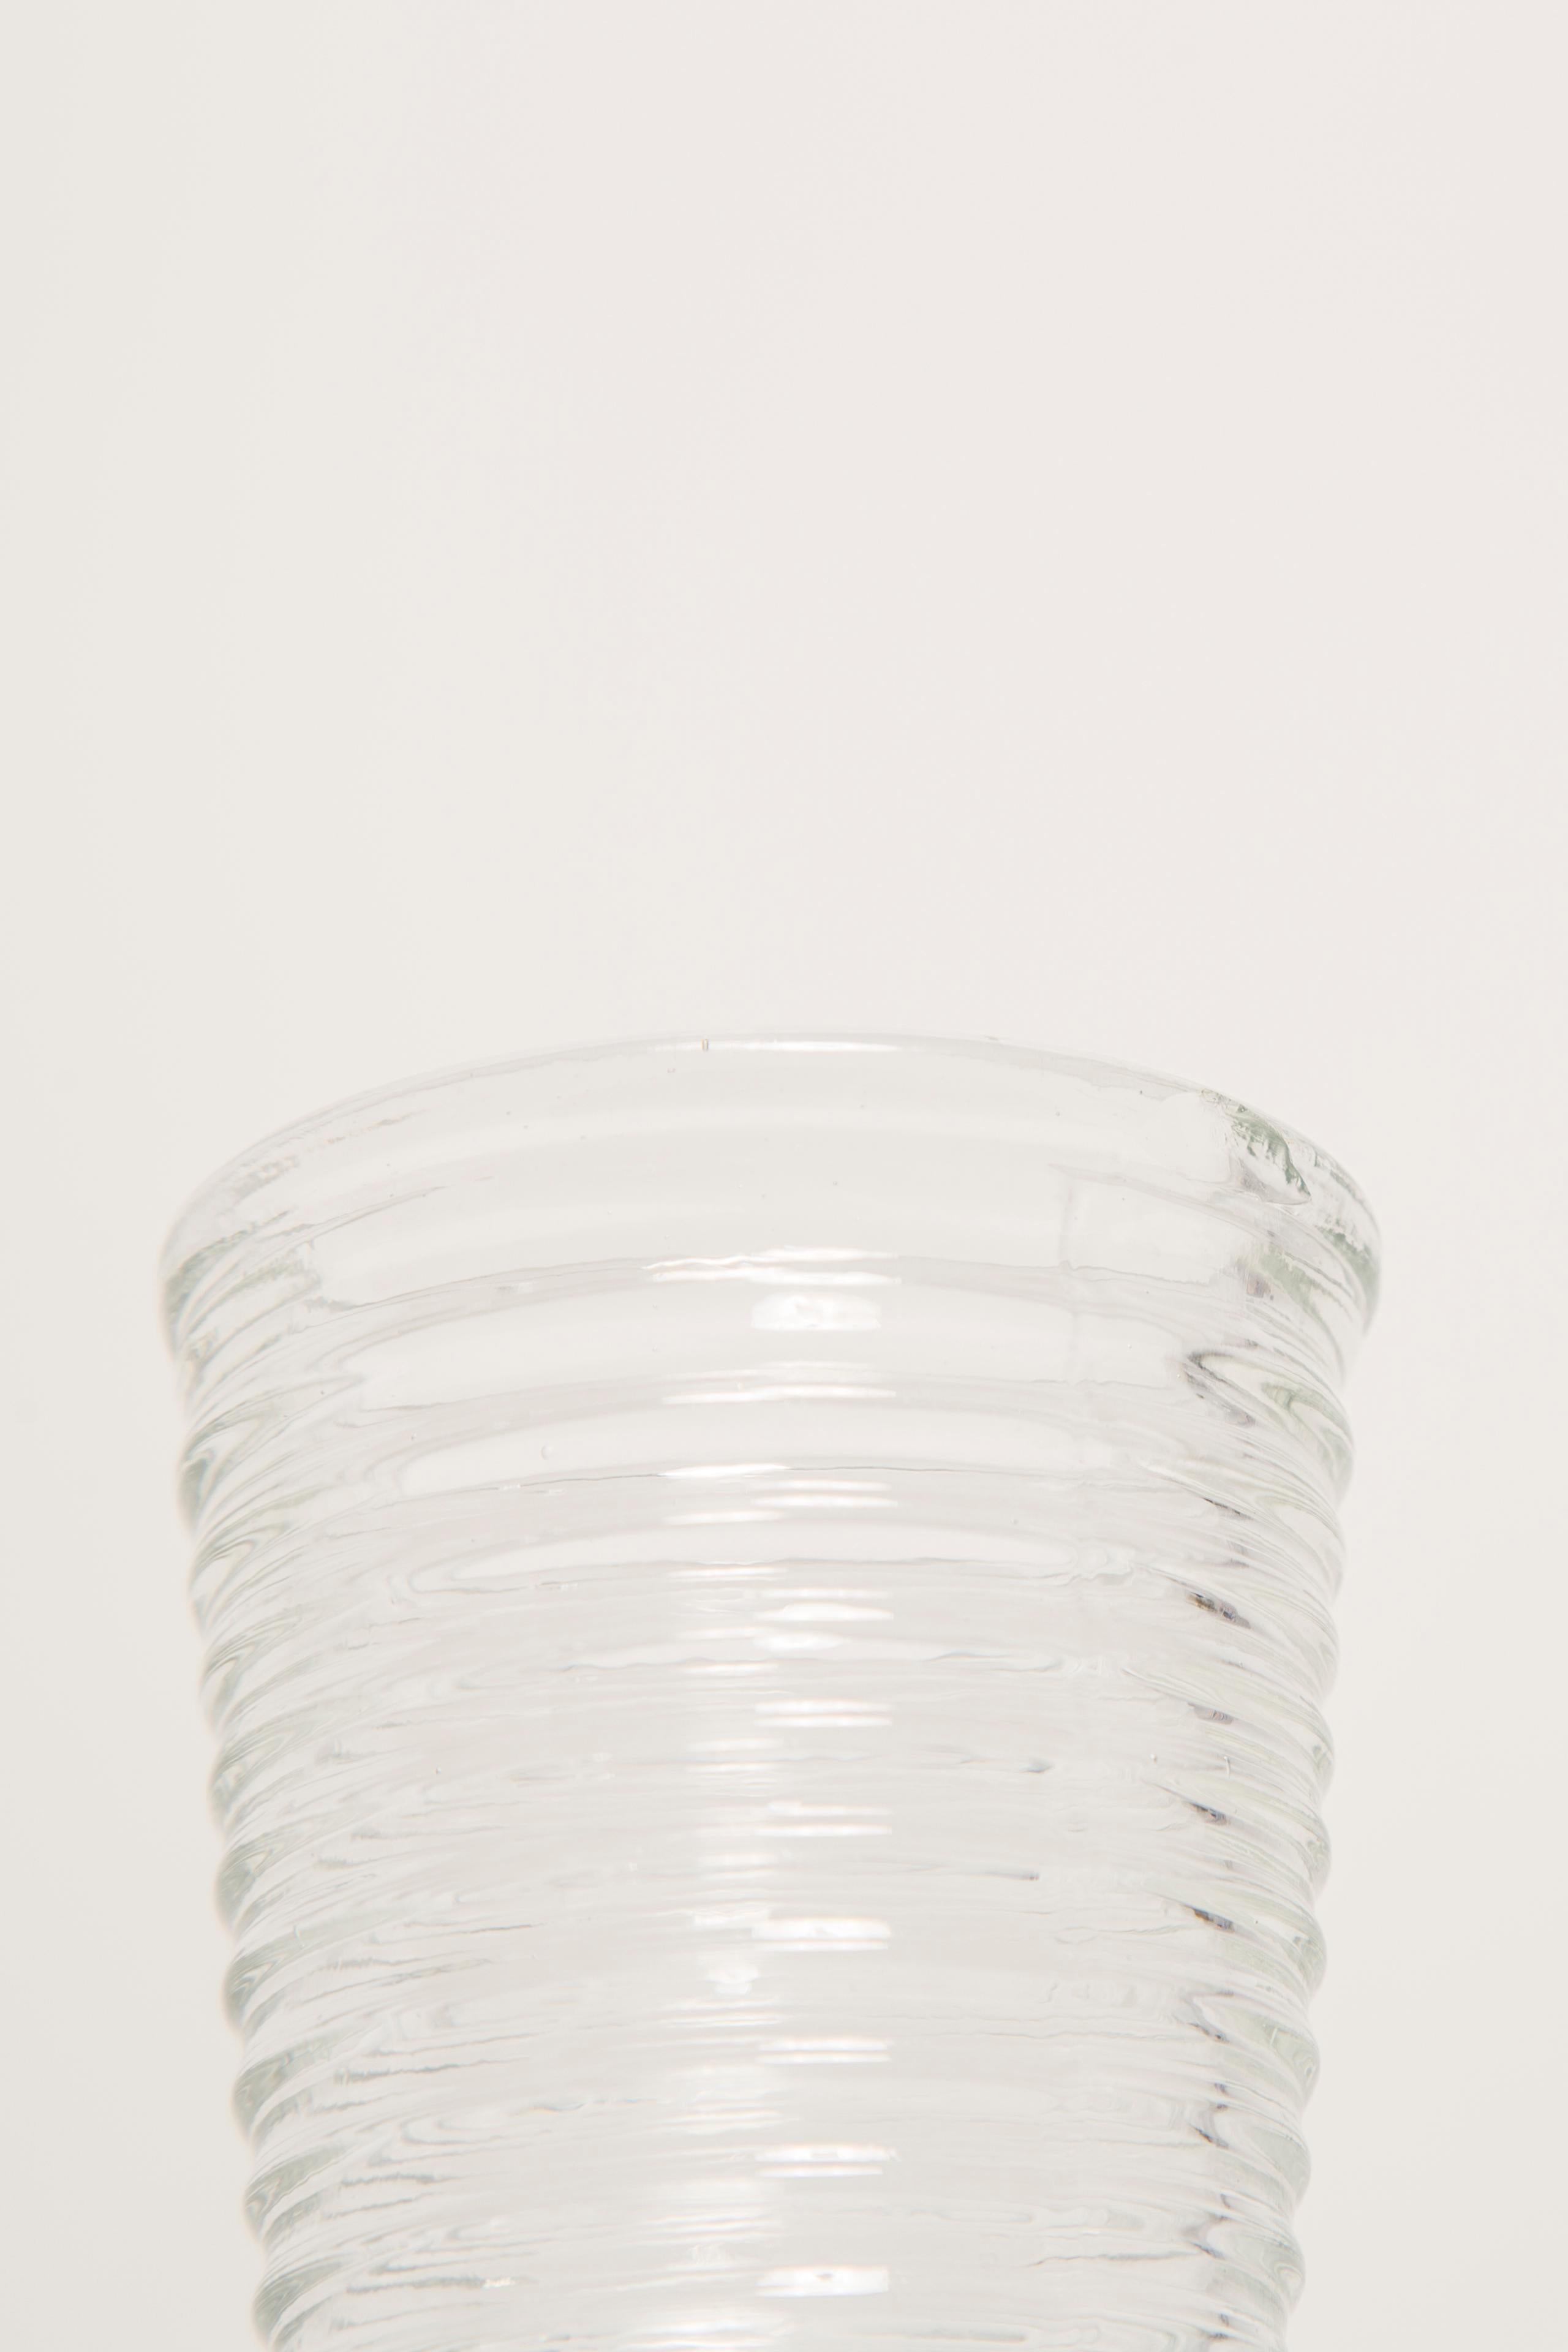 Midcentury Vintage Transparent Small Vase, Europe, 1960s For Sale 4